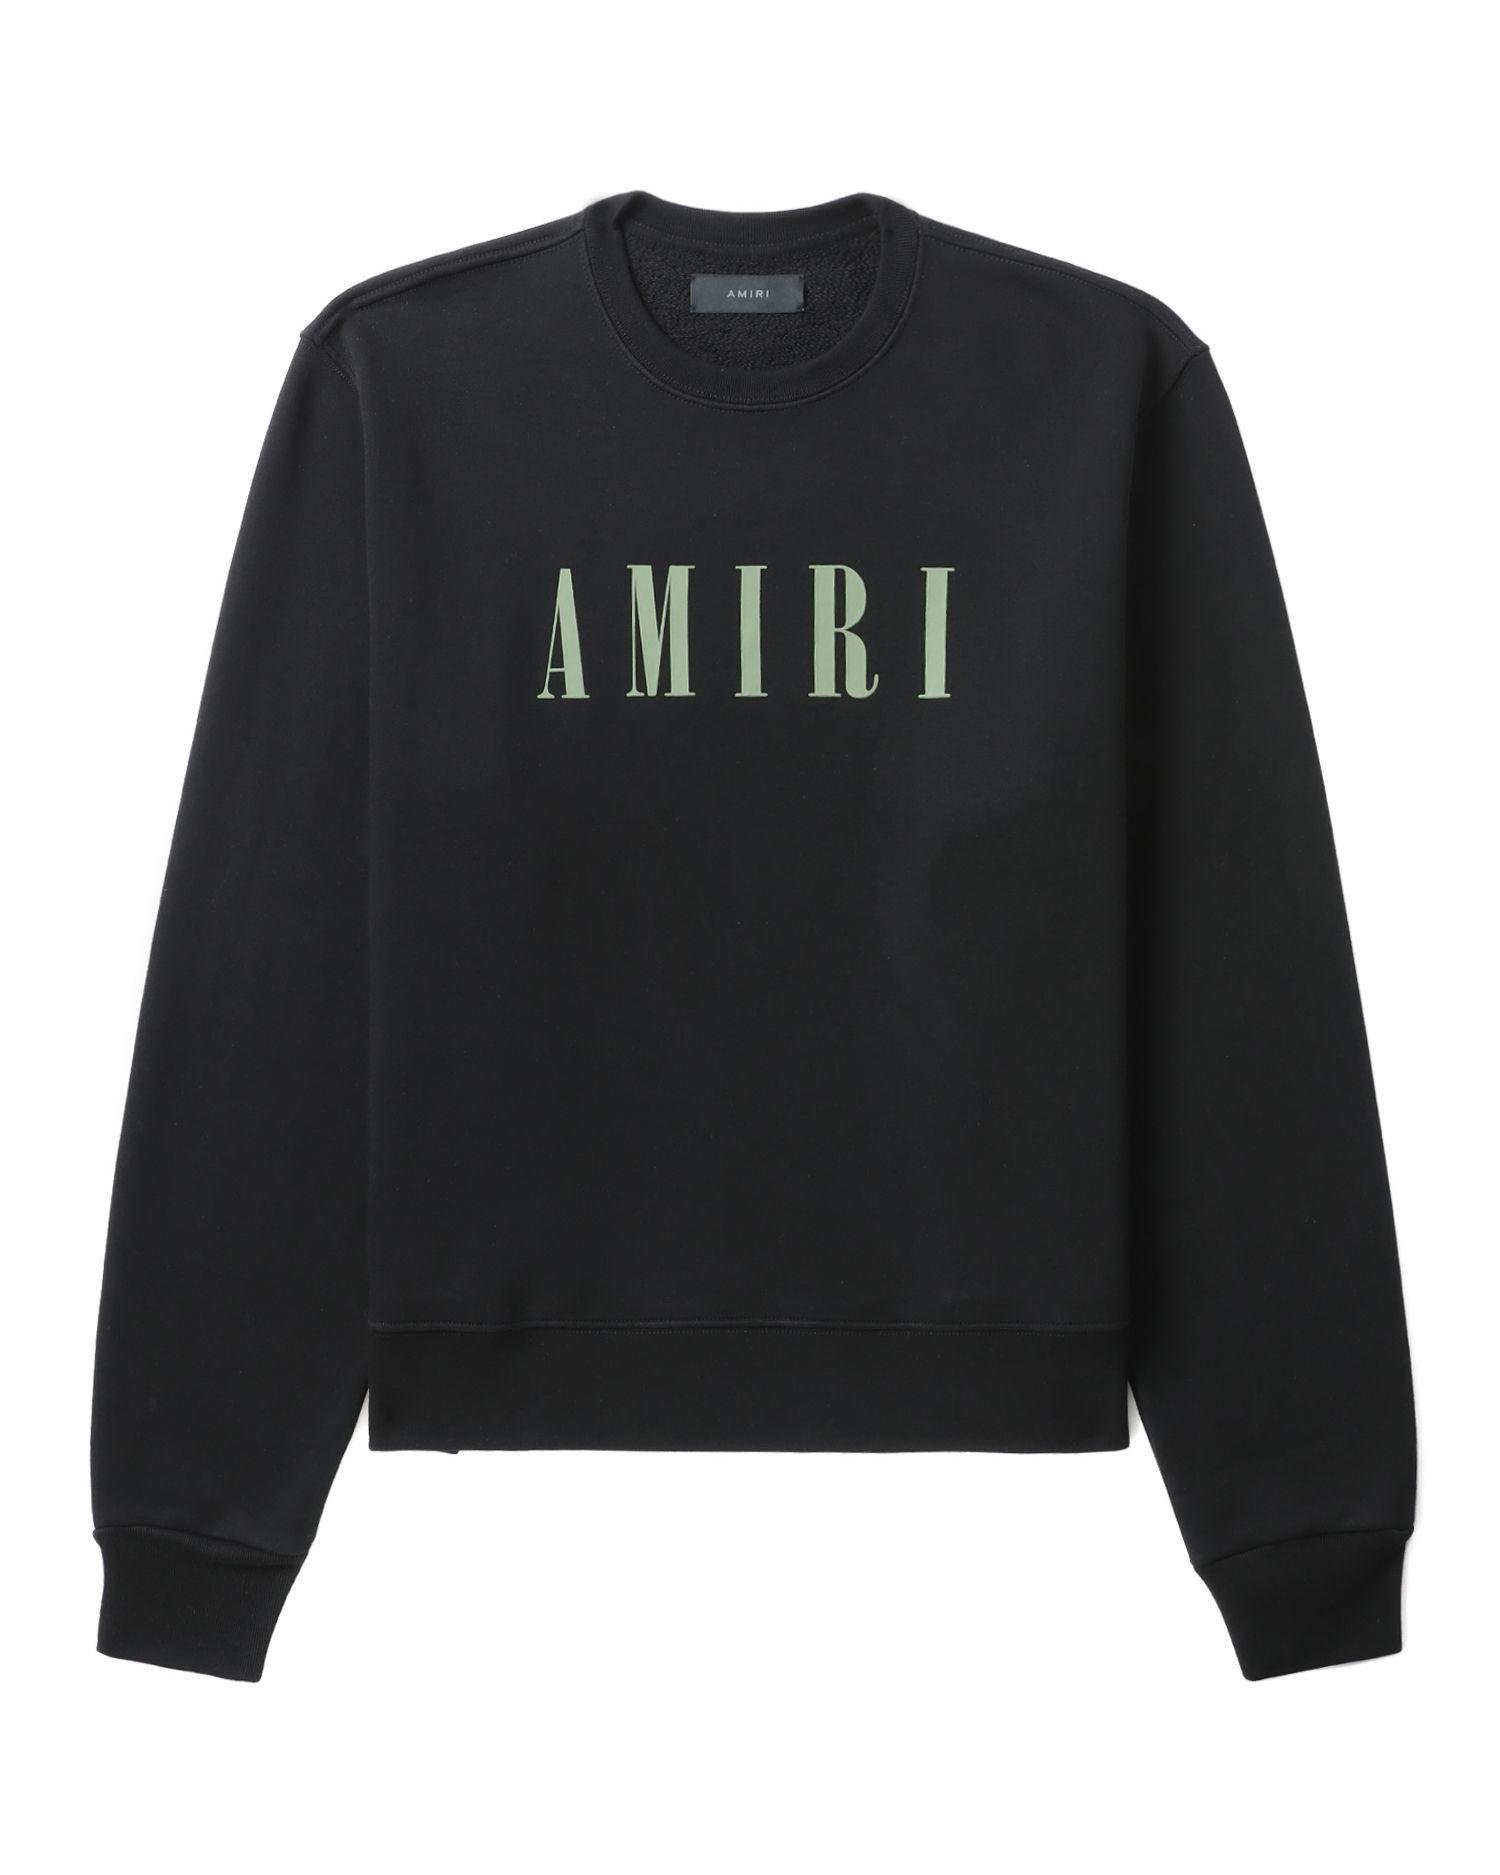 Core logo crew sweater by AMIRI